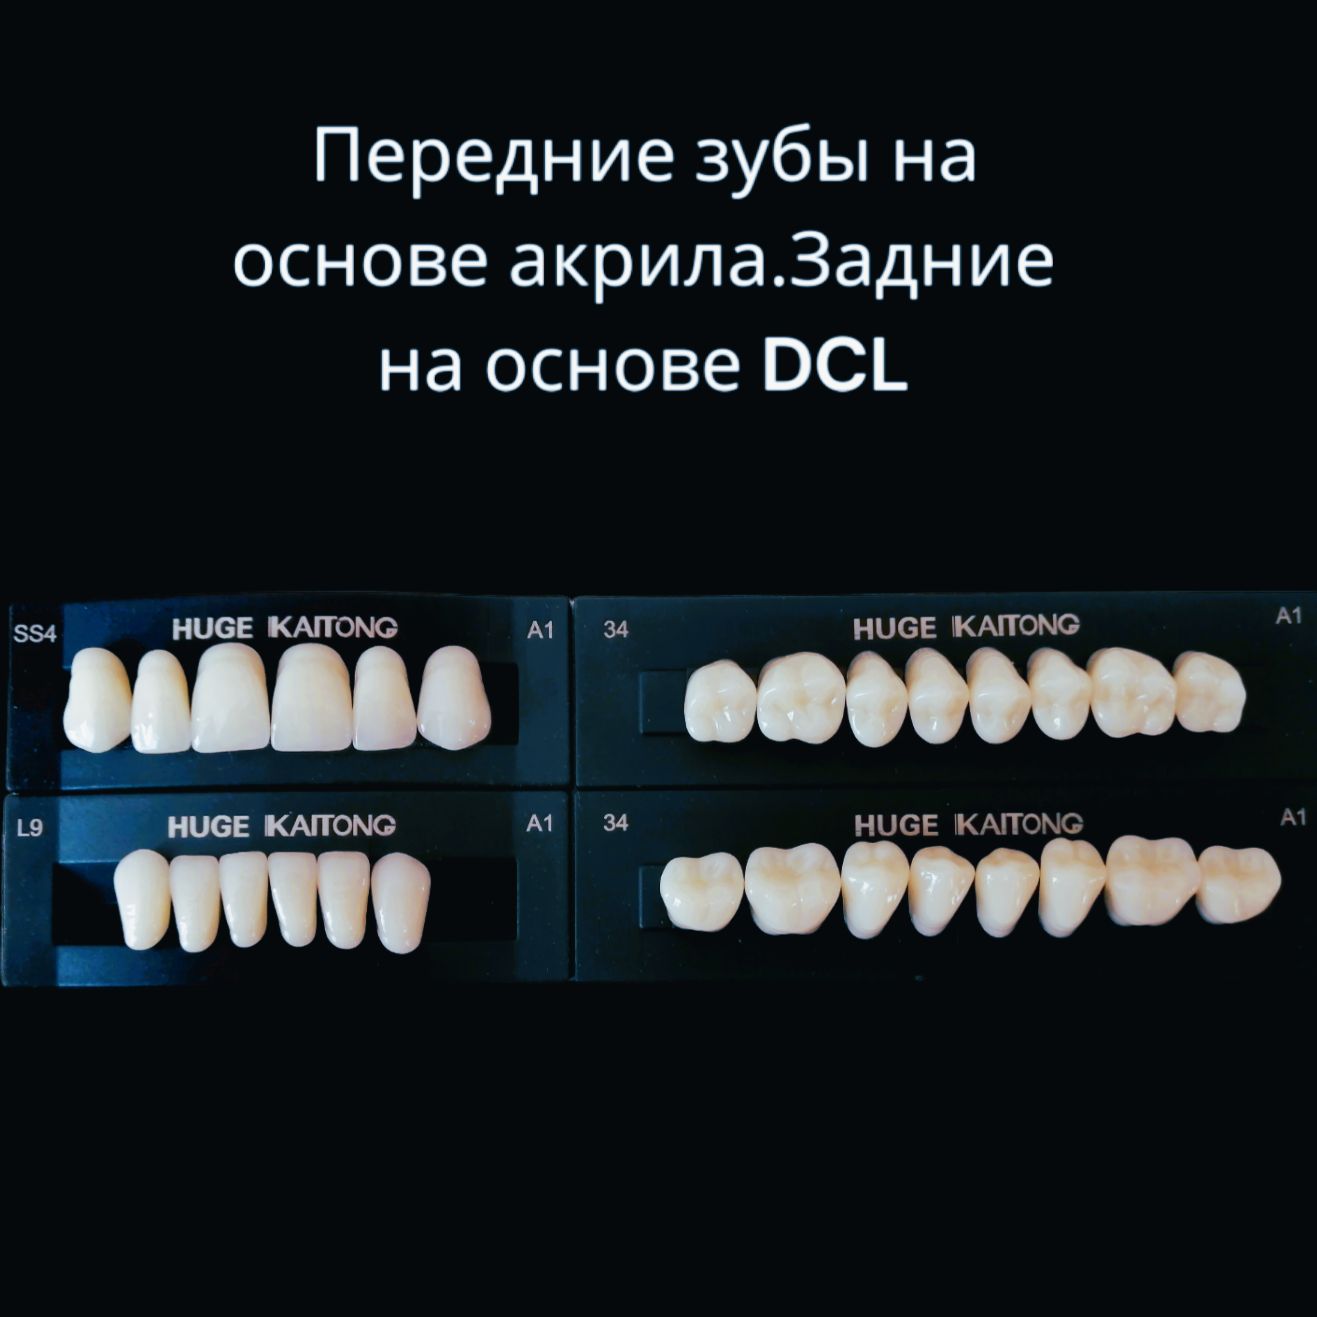 Зубыакриловые2-хслойныеА1SS4Kaitong(1гарнитур,28зубов)HUGEDENTAL